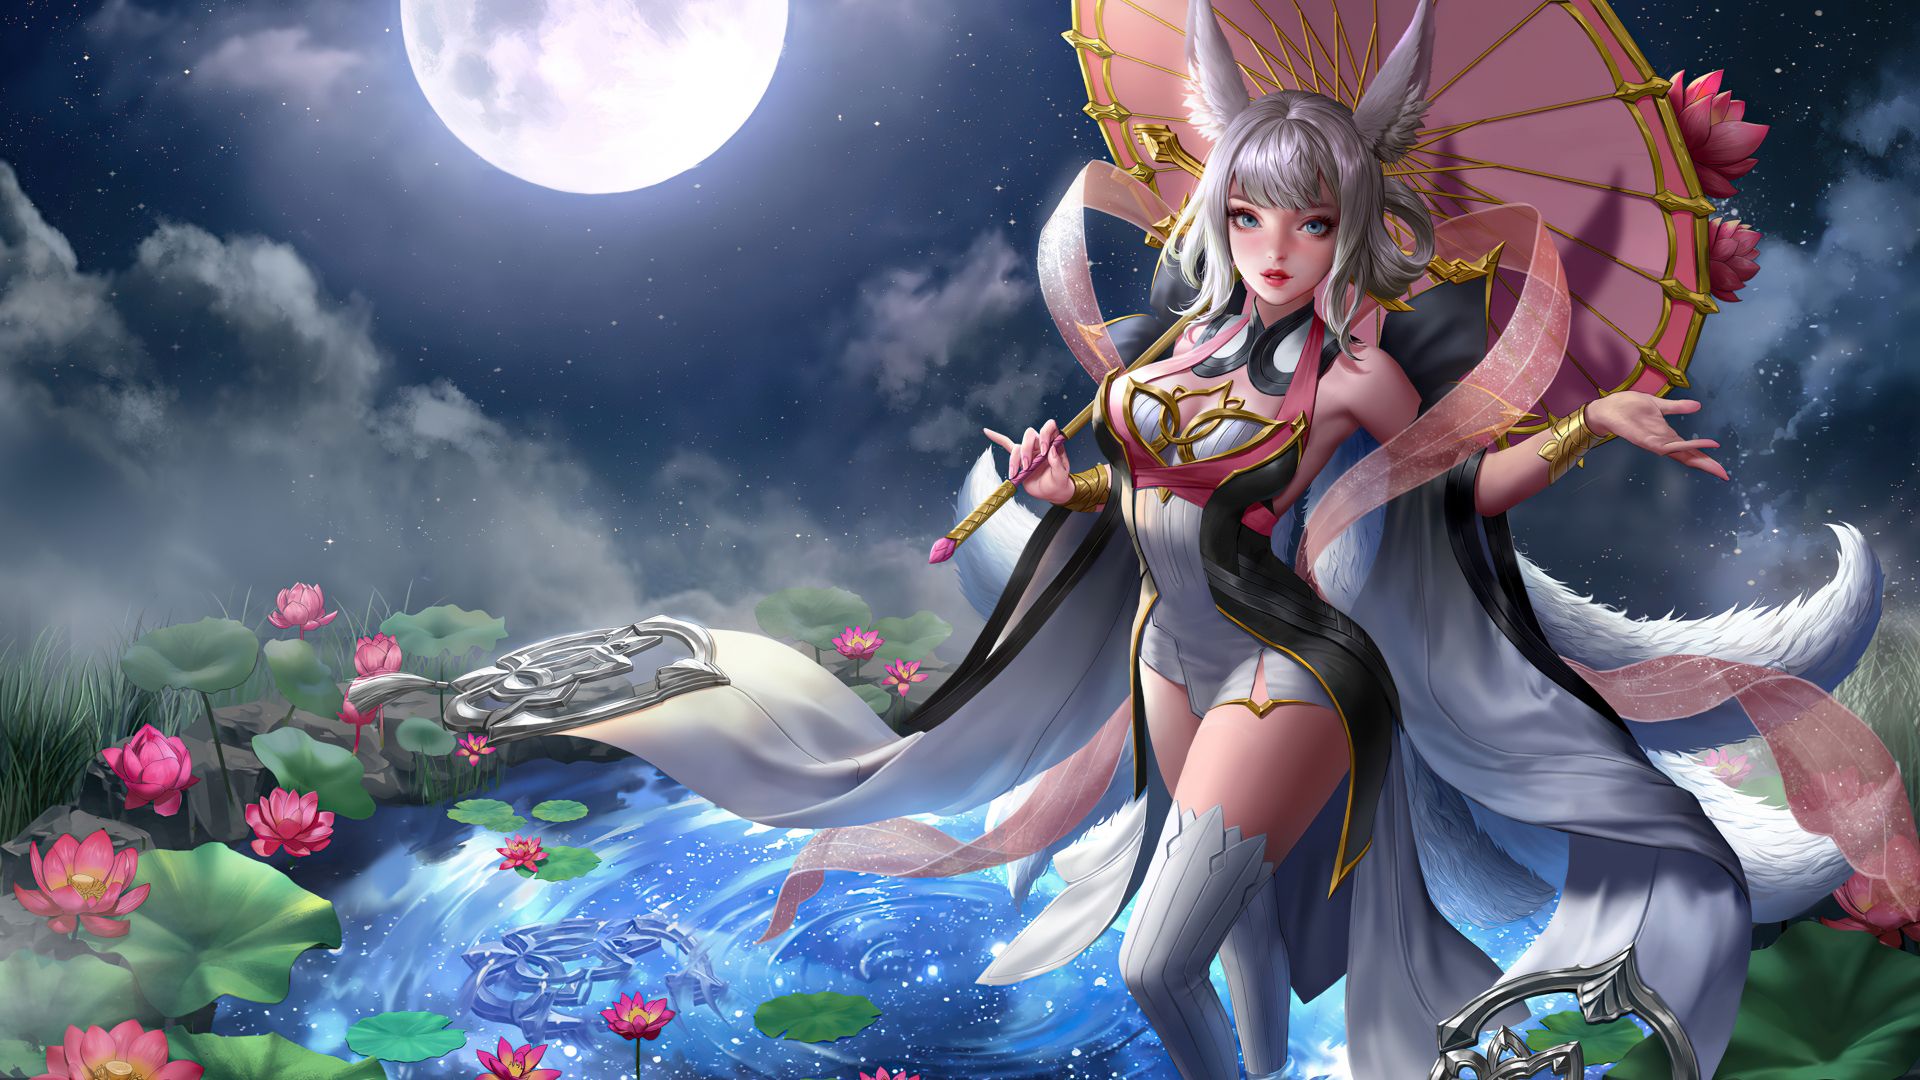 Wallpaper Anime girl, water lilies, moon, fantasy